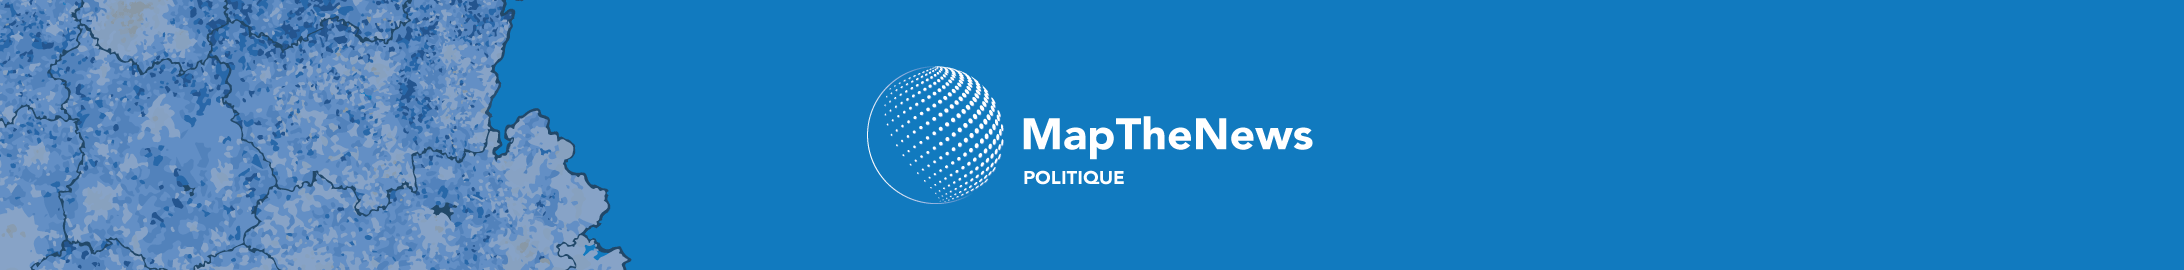 MapTheNews Politique